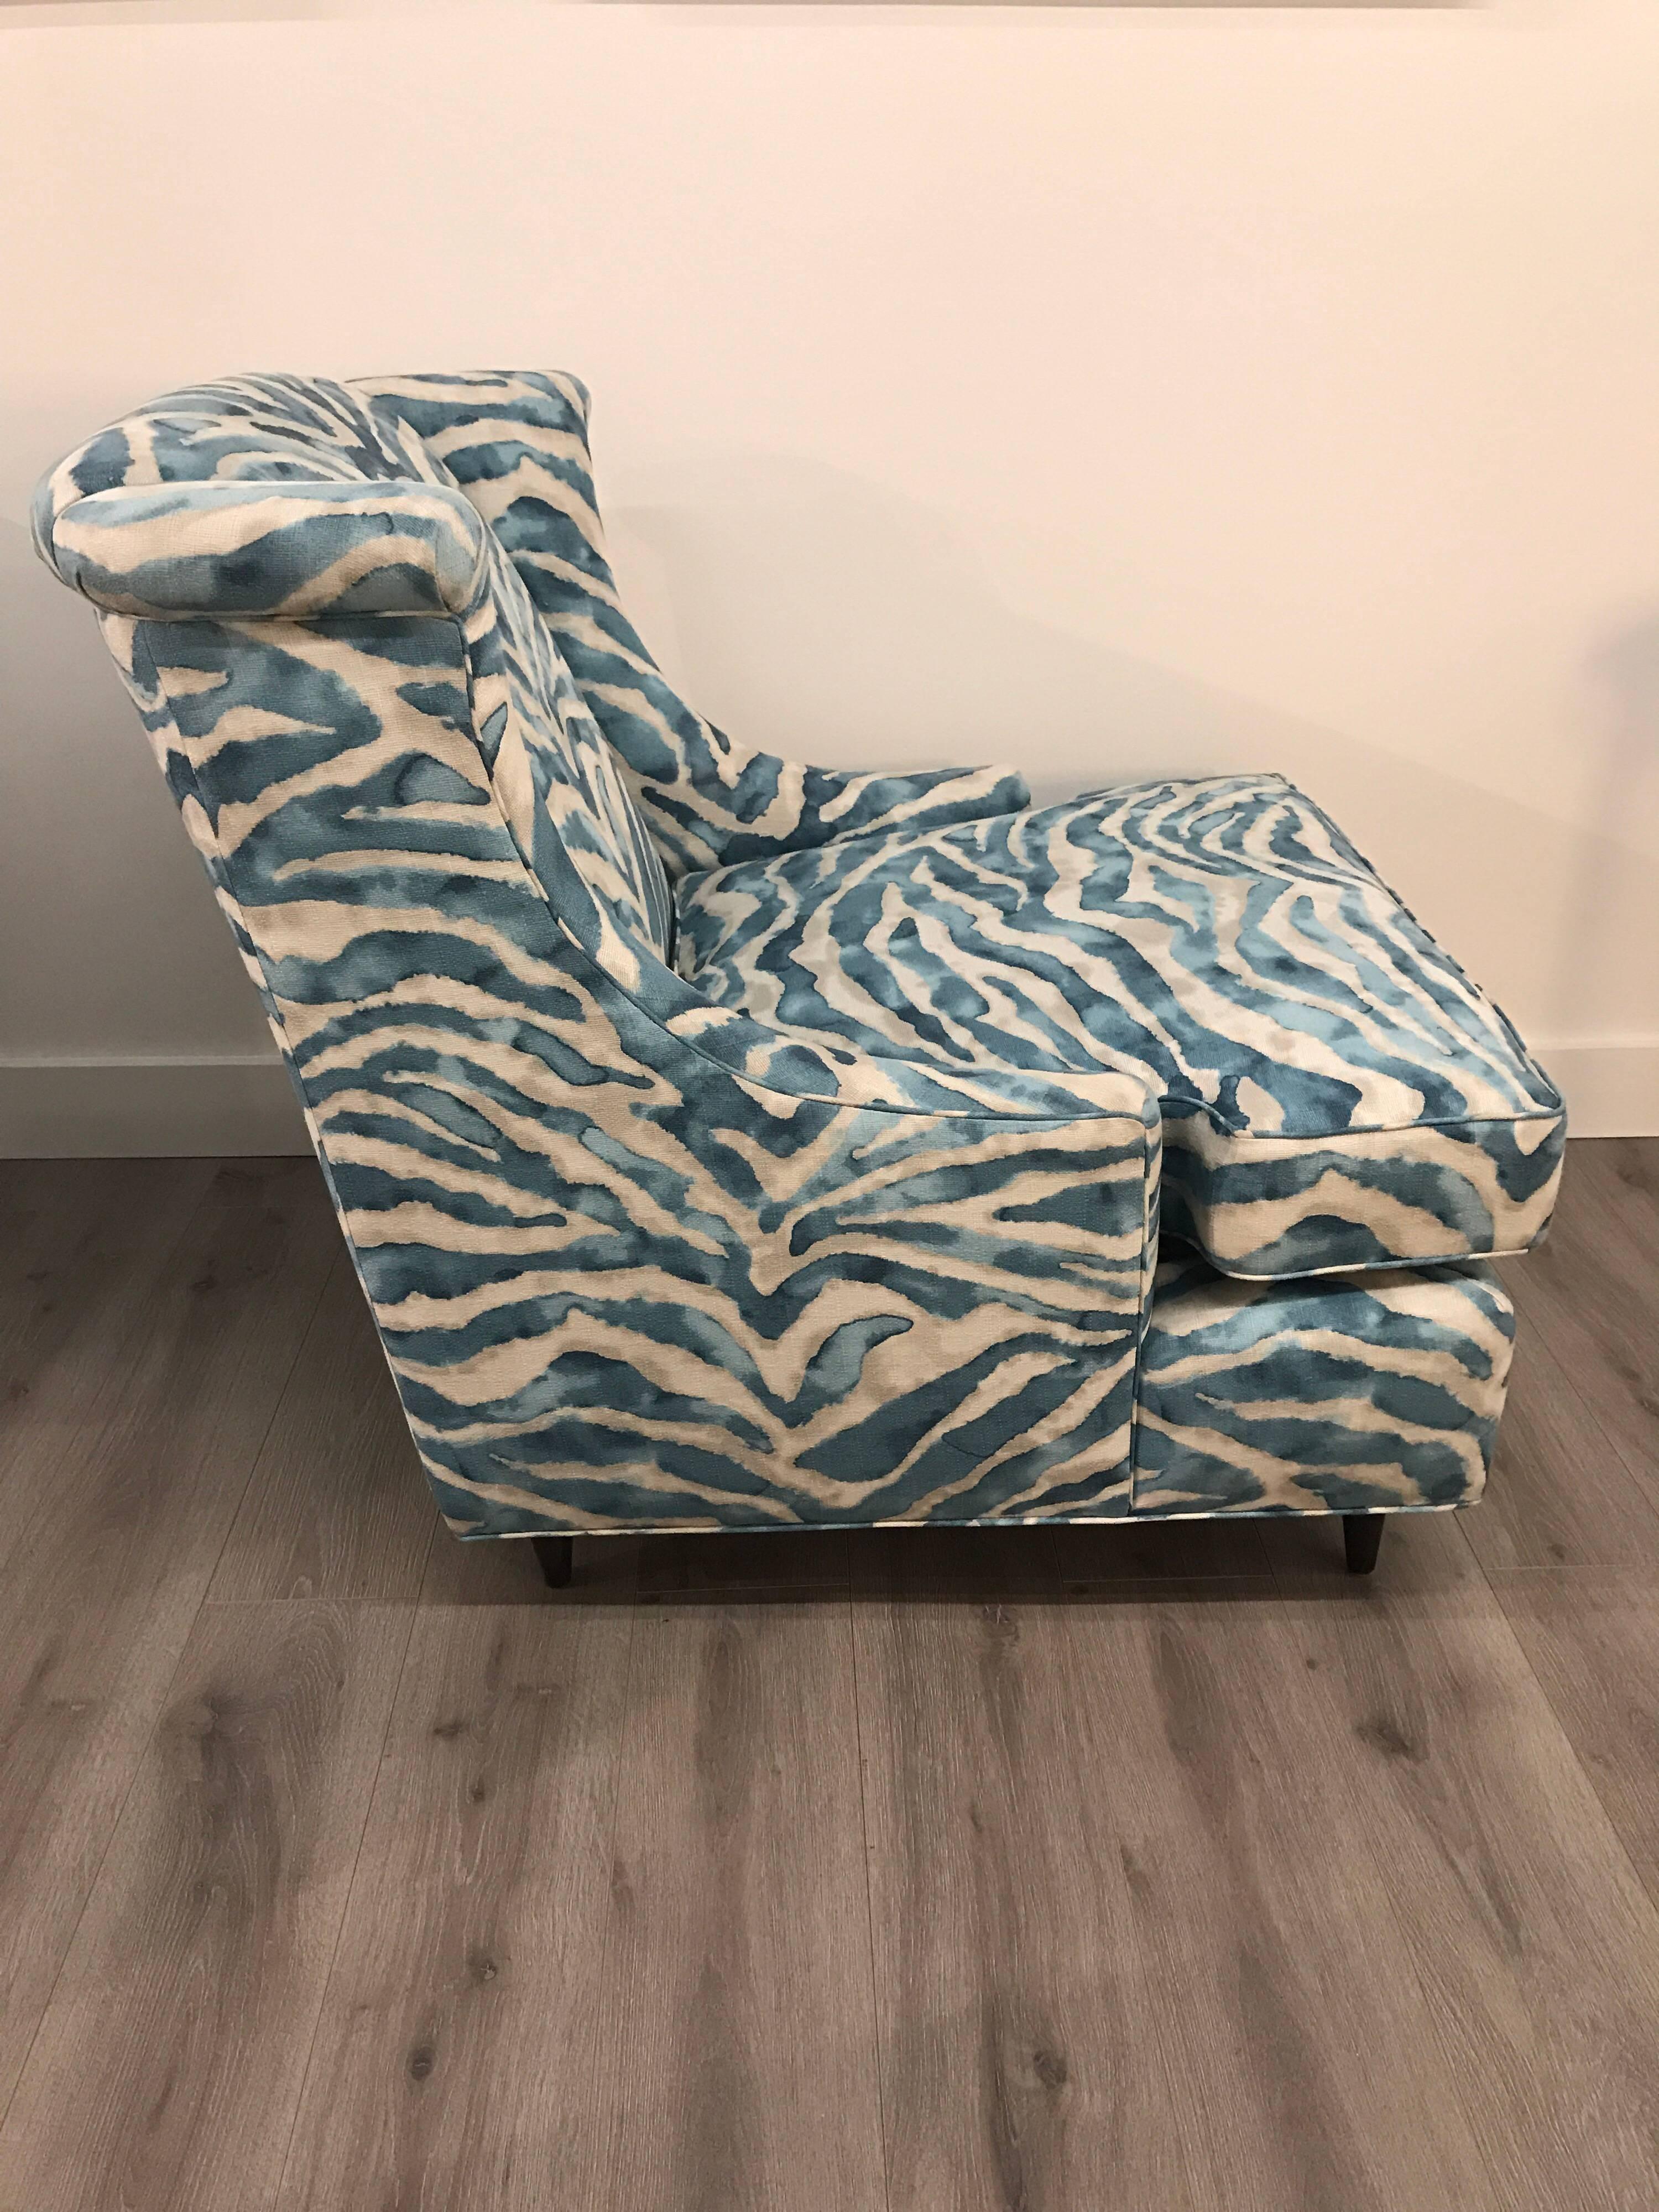 American Pair of Kravet Upholstered Blue Zebra Print Club Wingback Chairs